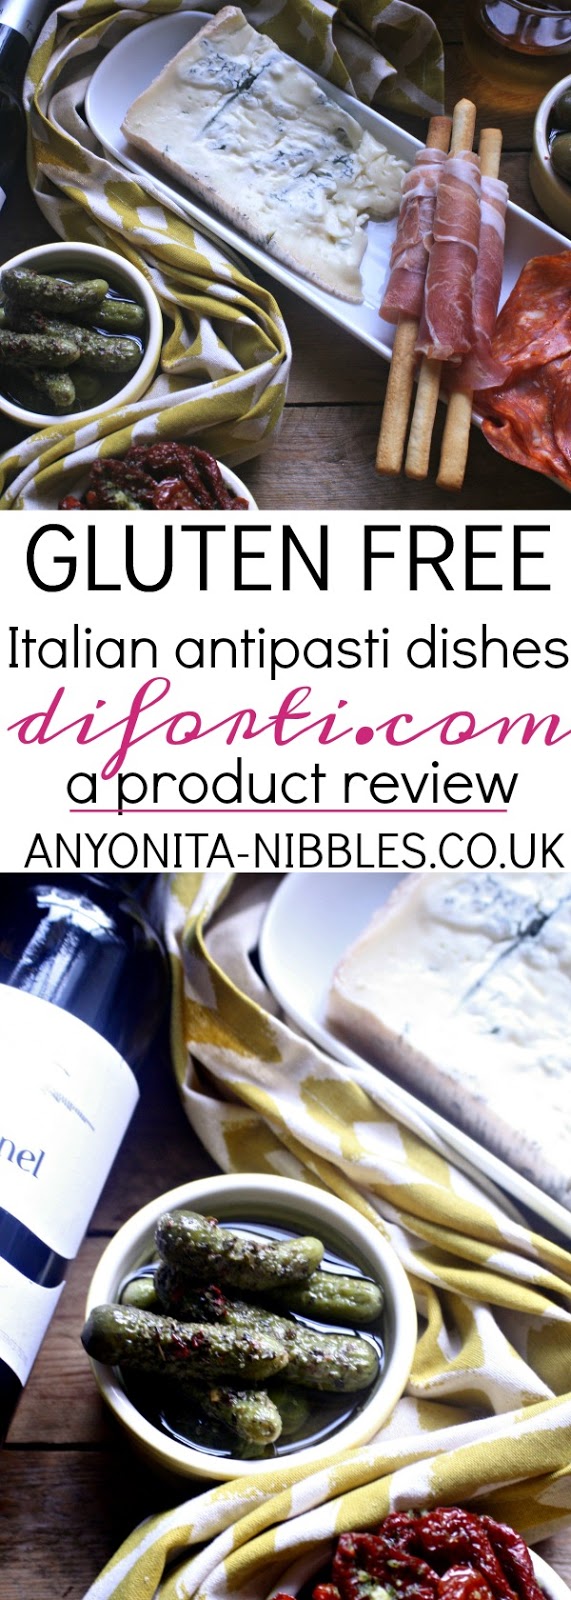 Gluten Free Italian Antipasti Dishes from Diforti.com